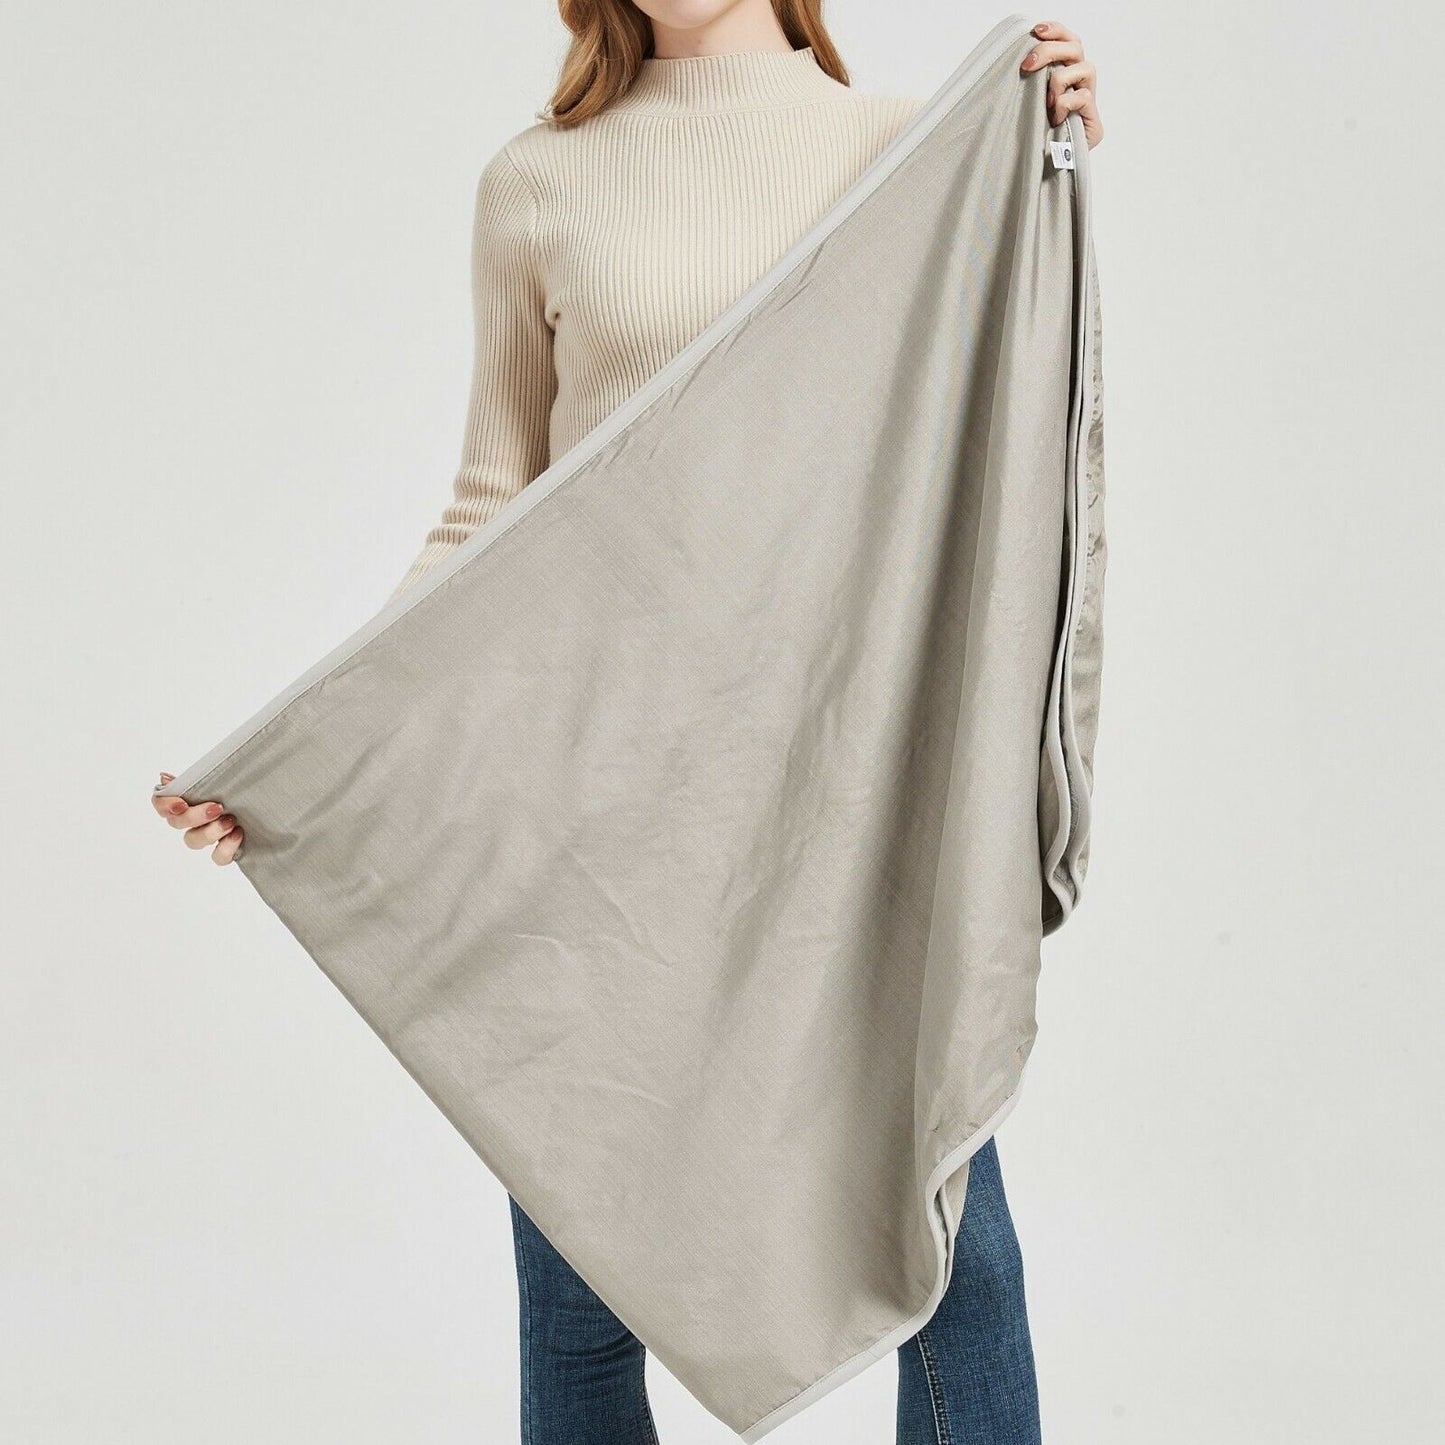 EMF Protection Black/Gray Anti-Radiation Poncho Scarves Wrap Large Blanket Blocks 5G WiFi RF Organic Cotton Women Pregnancy Scarf Hooded